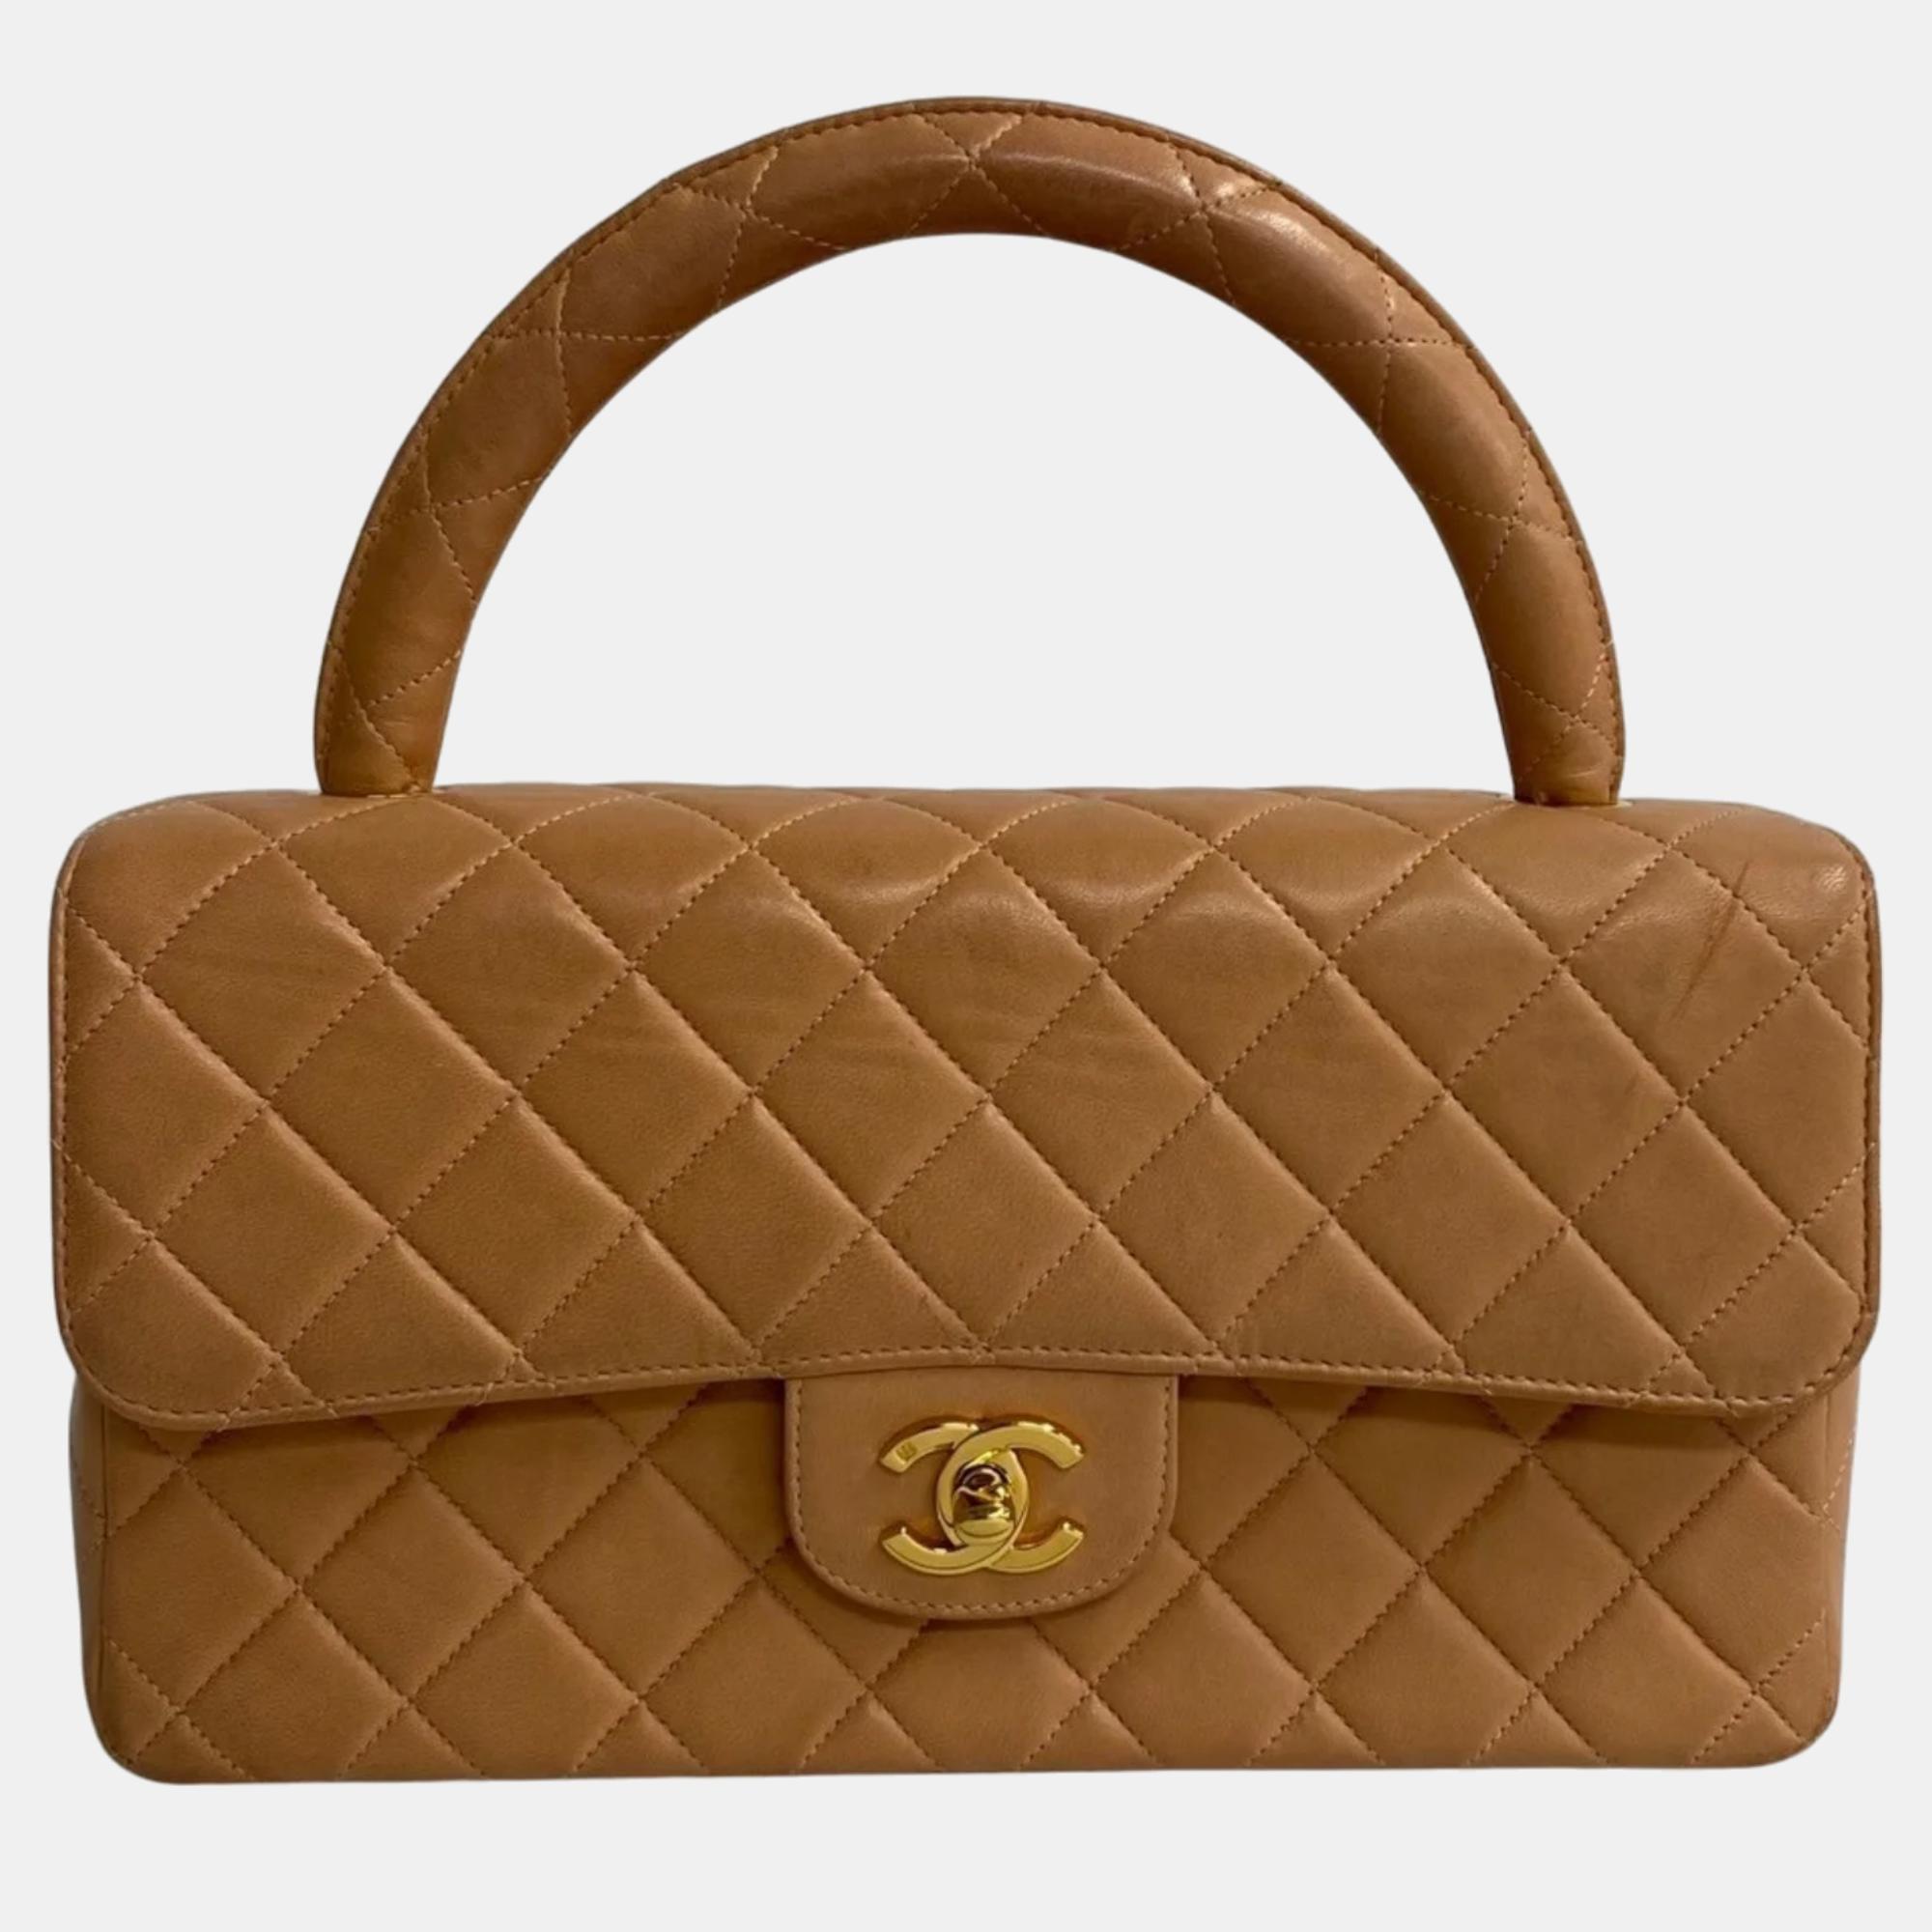 Chanel brown leather cc matelasse top handle bag